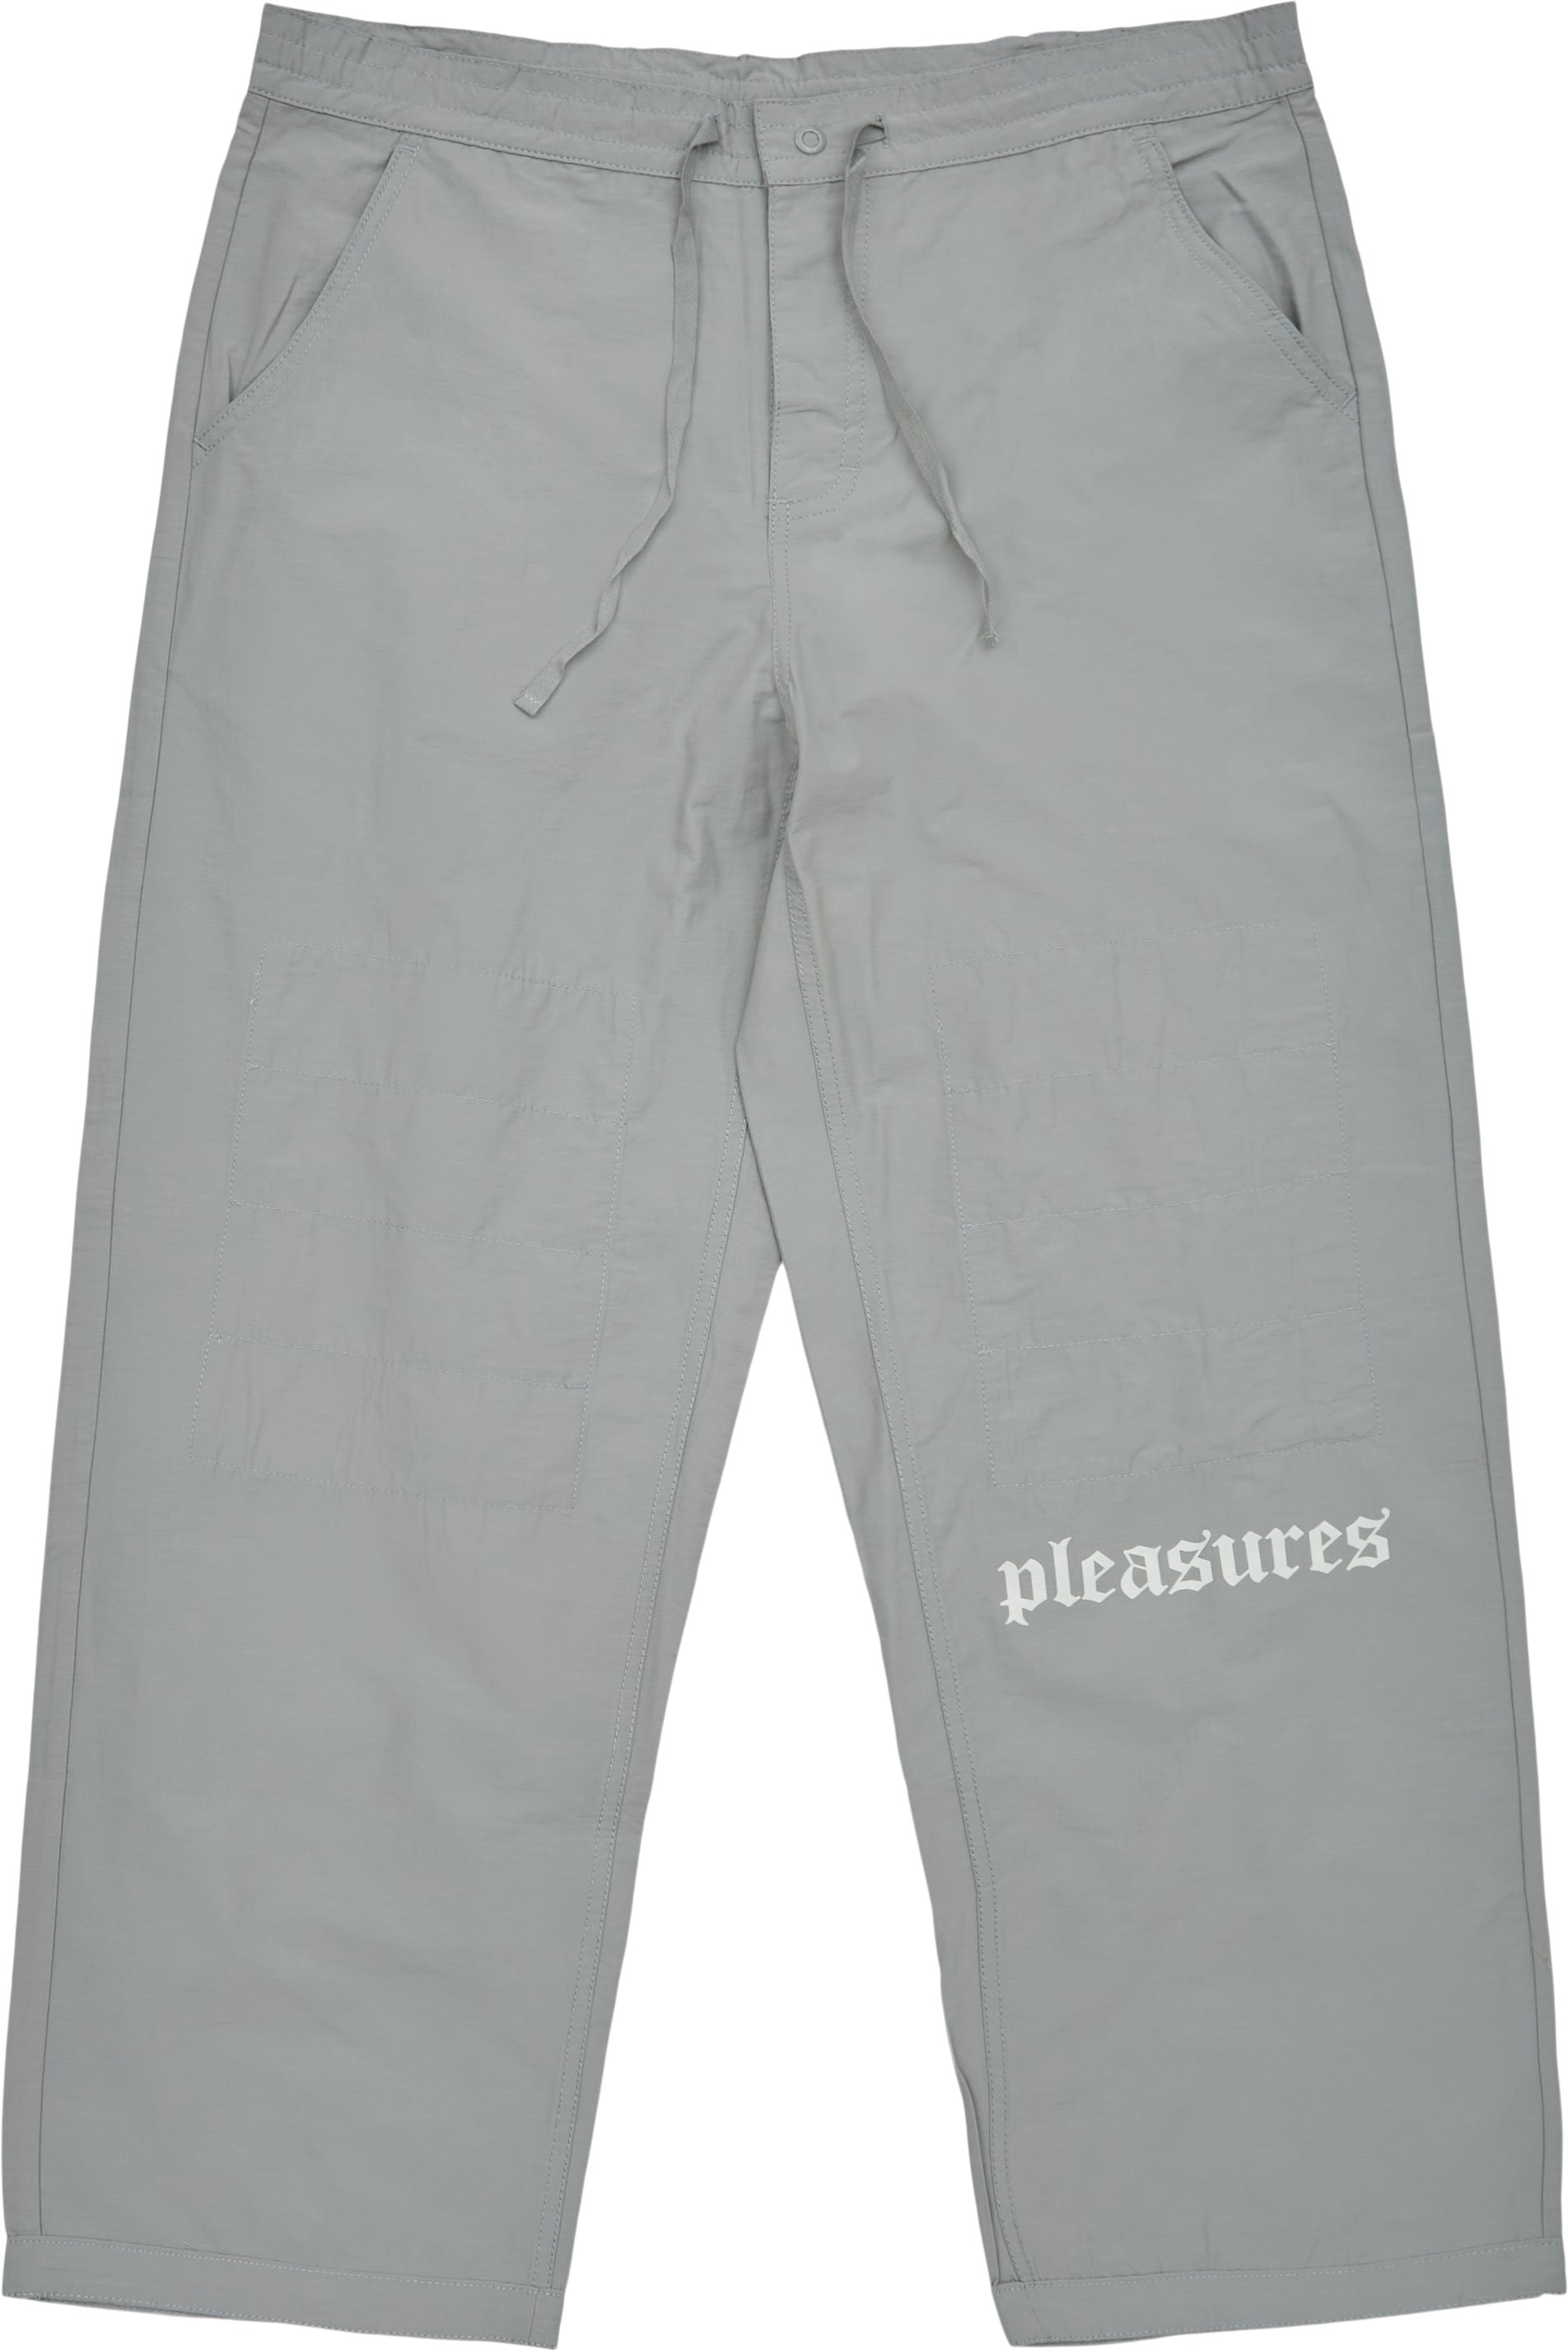 Pleasures Trousers BLITZ KARATE Grey